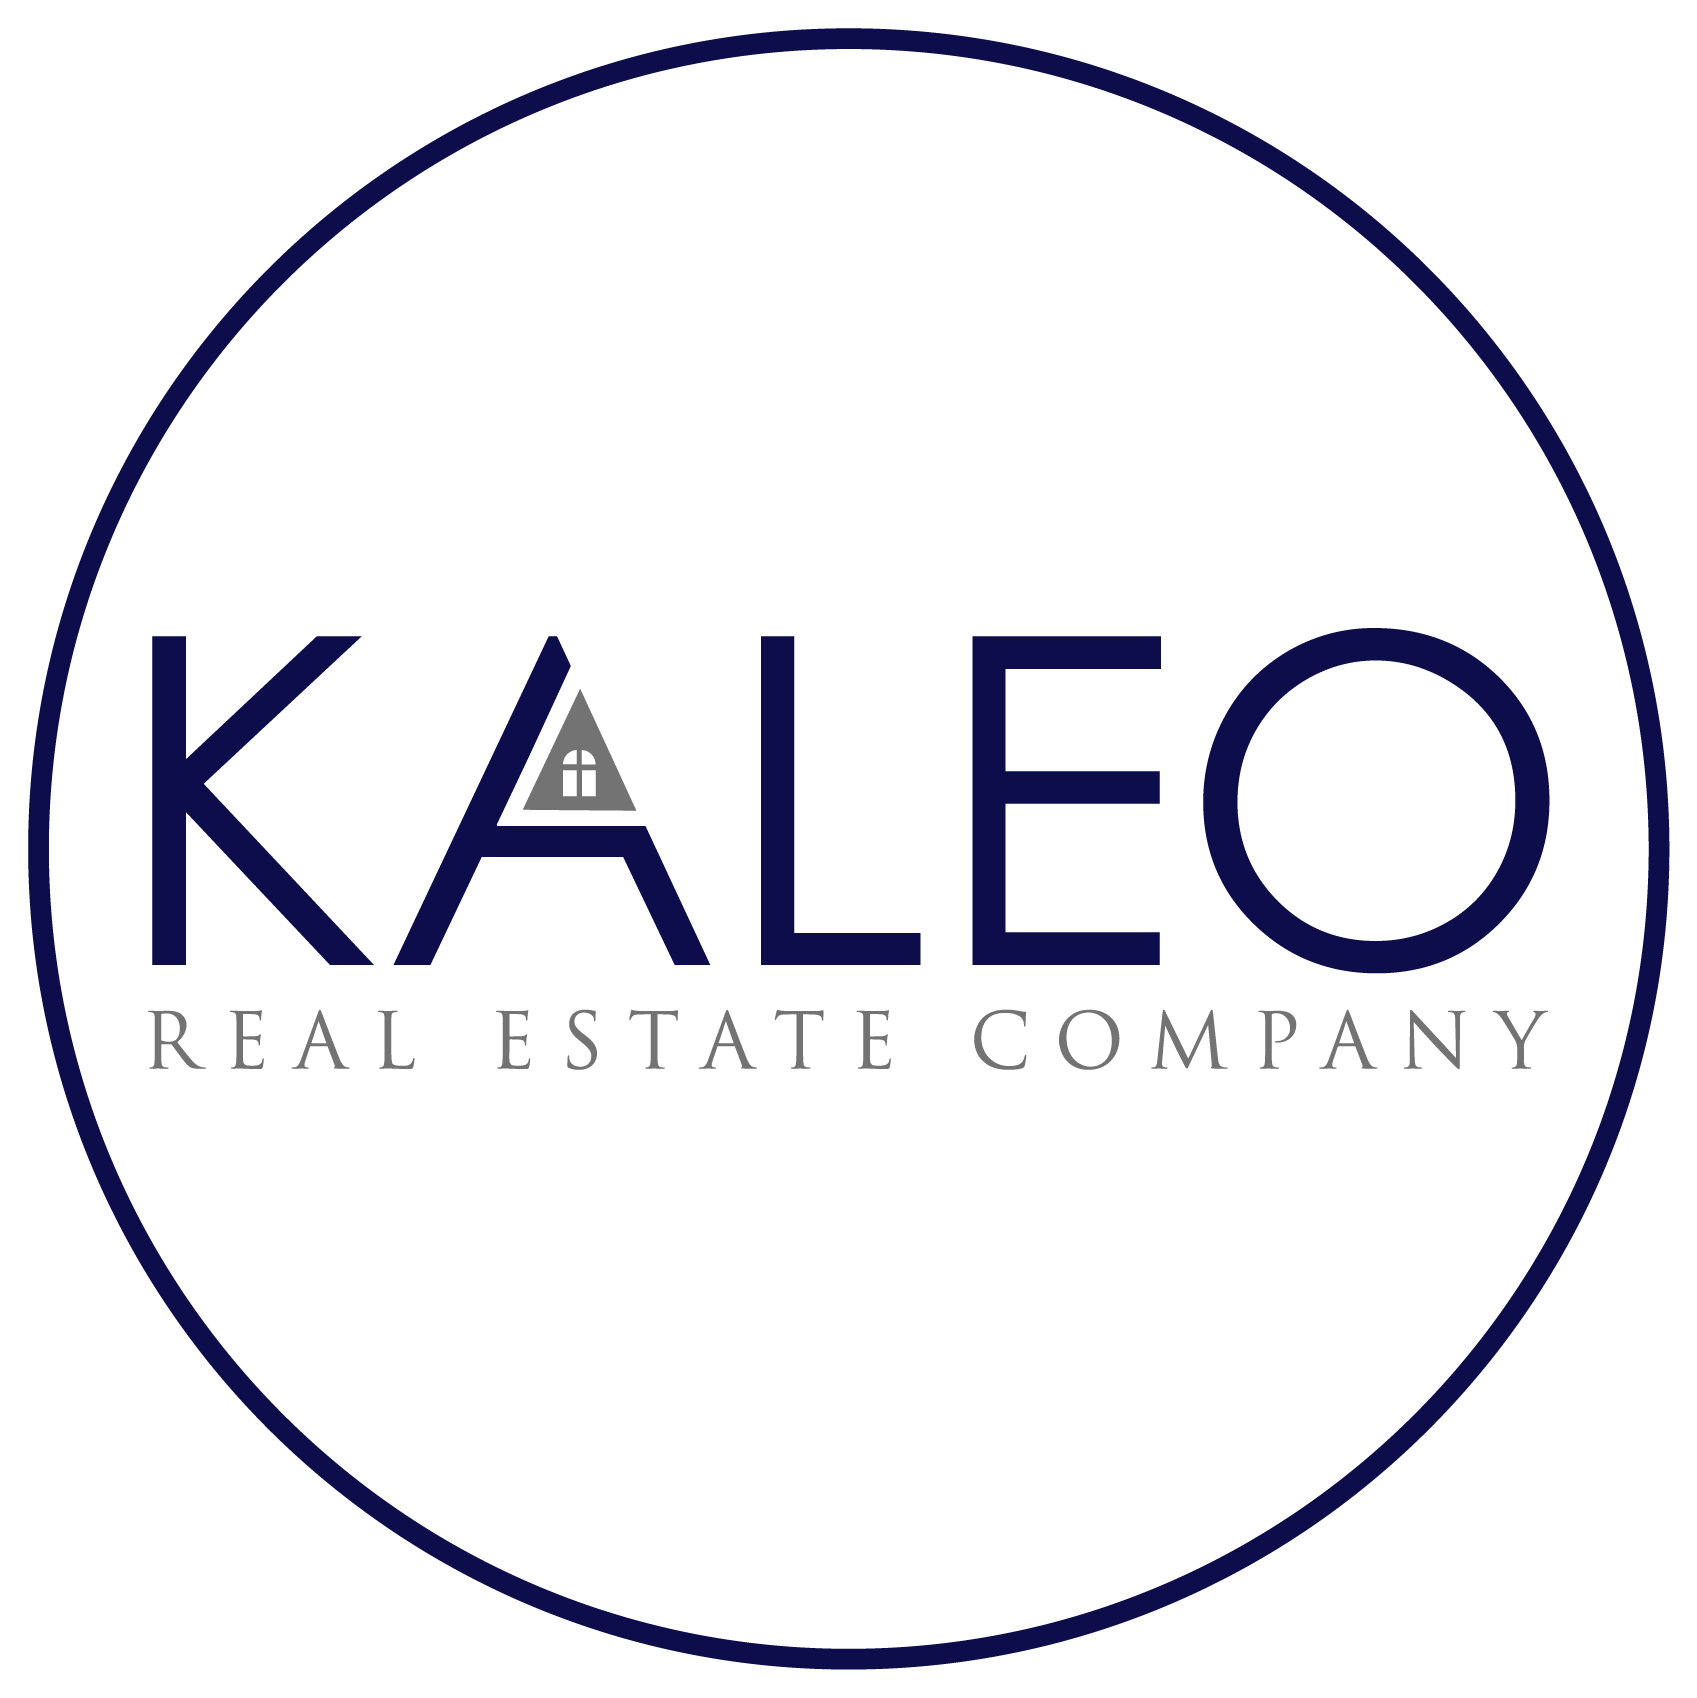 KALEO Real Estate Company